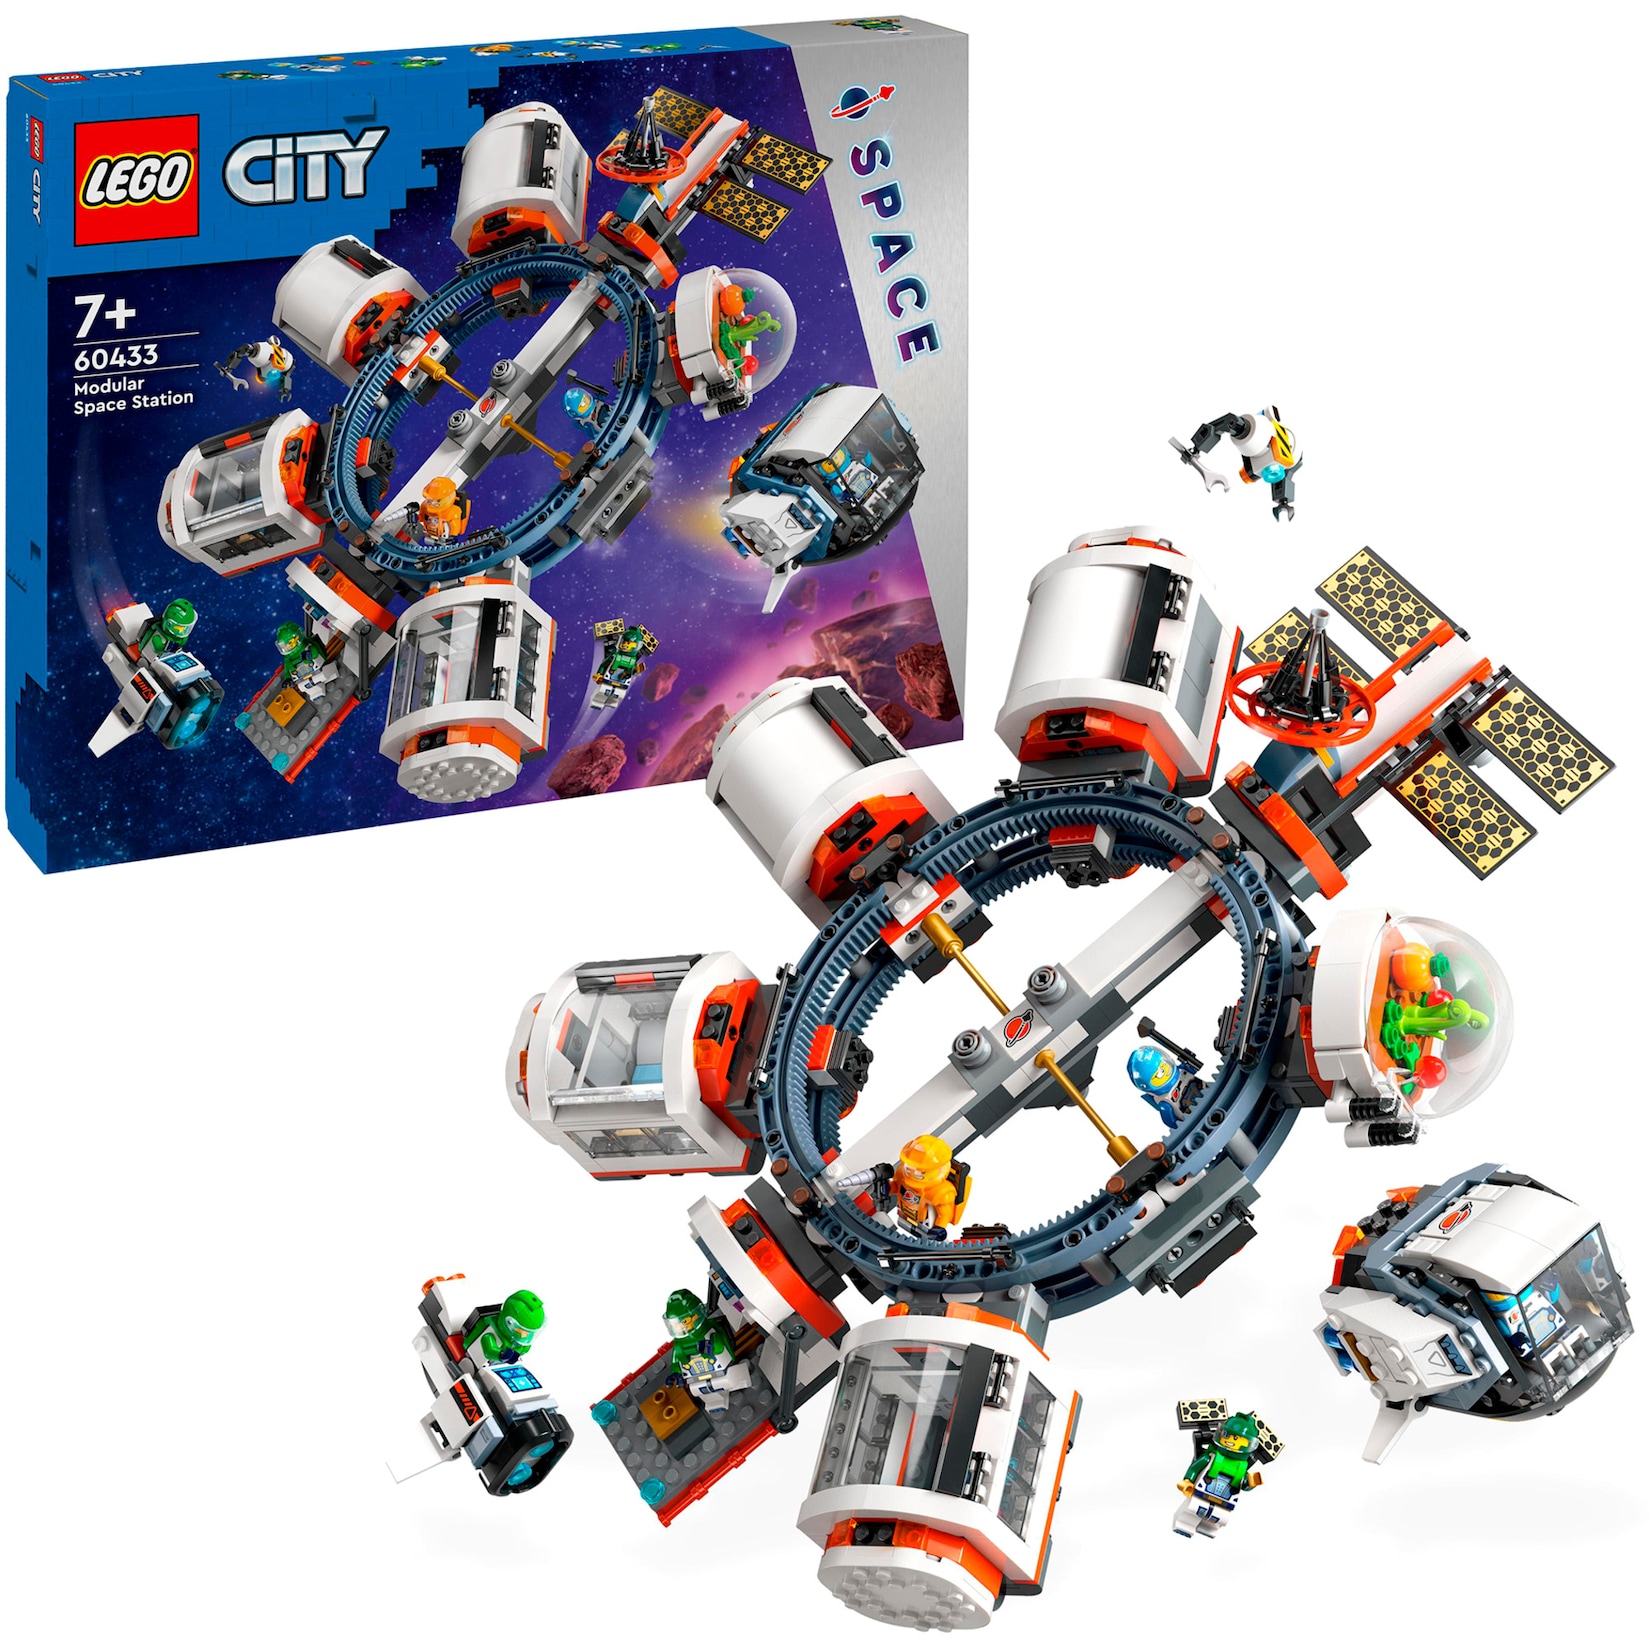 LEGO Konstruktionsspielzeug City Modulare Raumstation